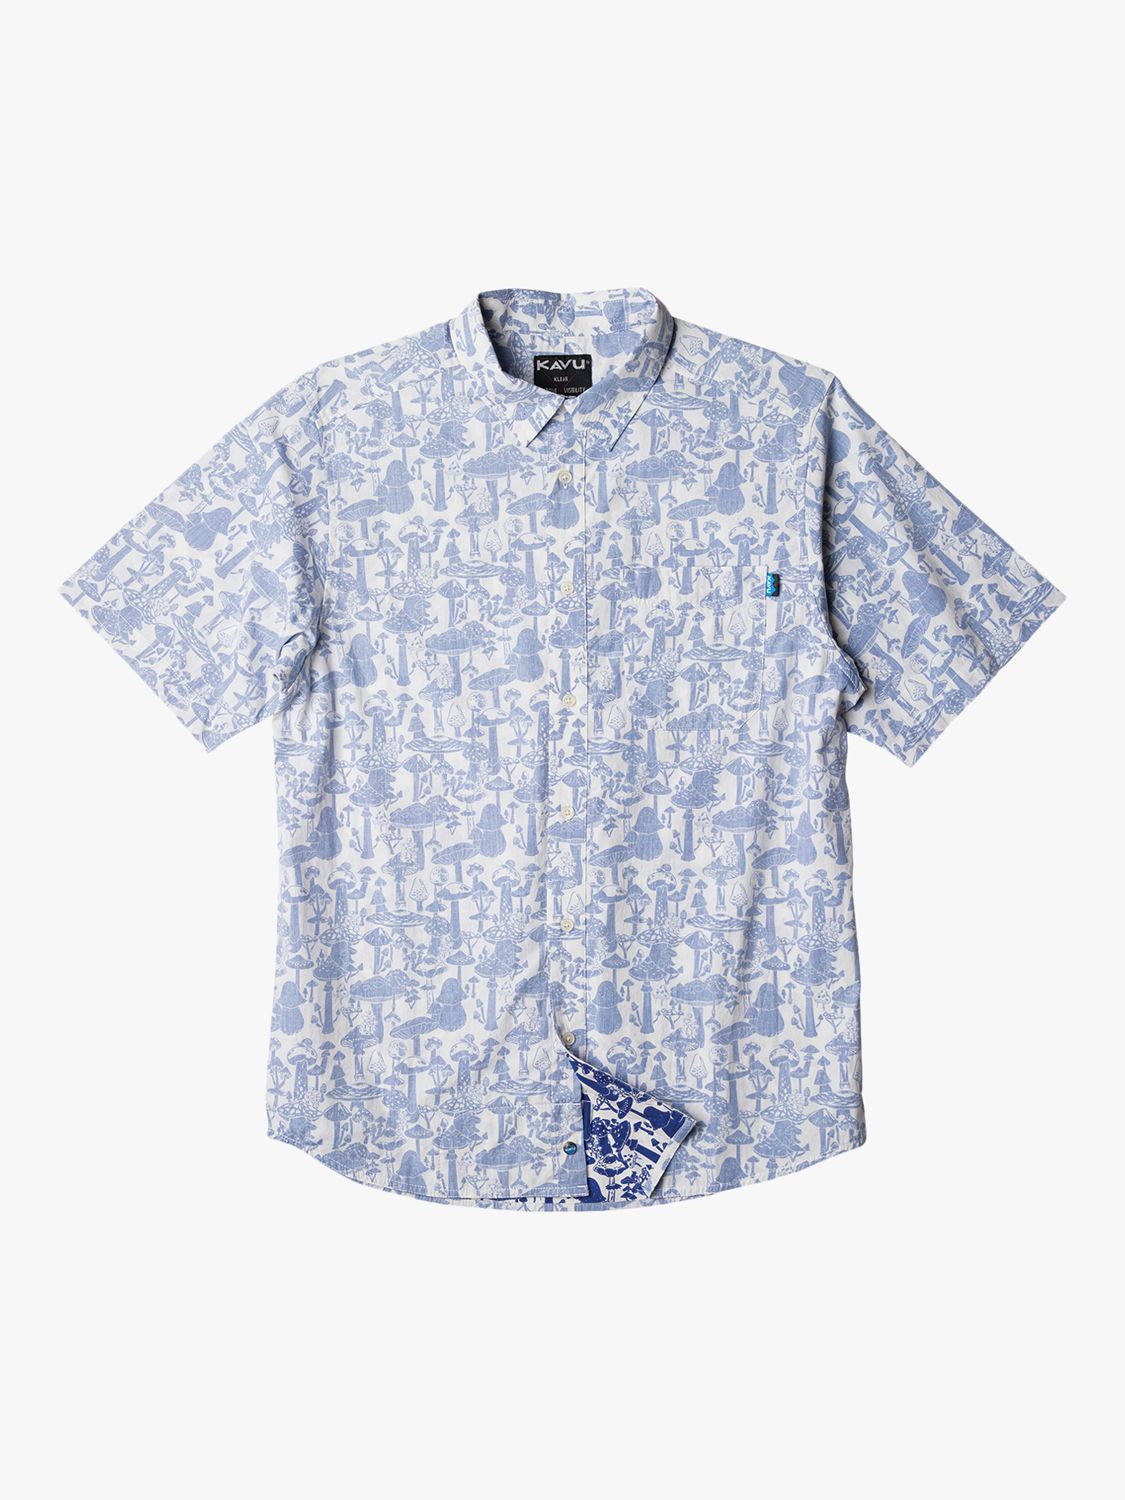 KAVU Topspot Reverse Print Short Sleeve Shirt, Mushroom Forest, M